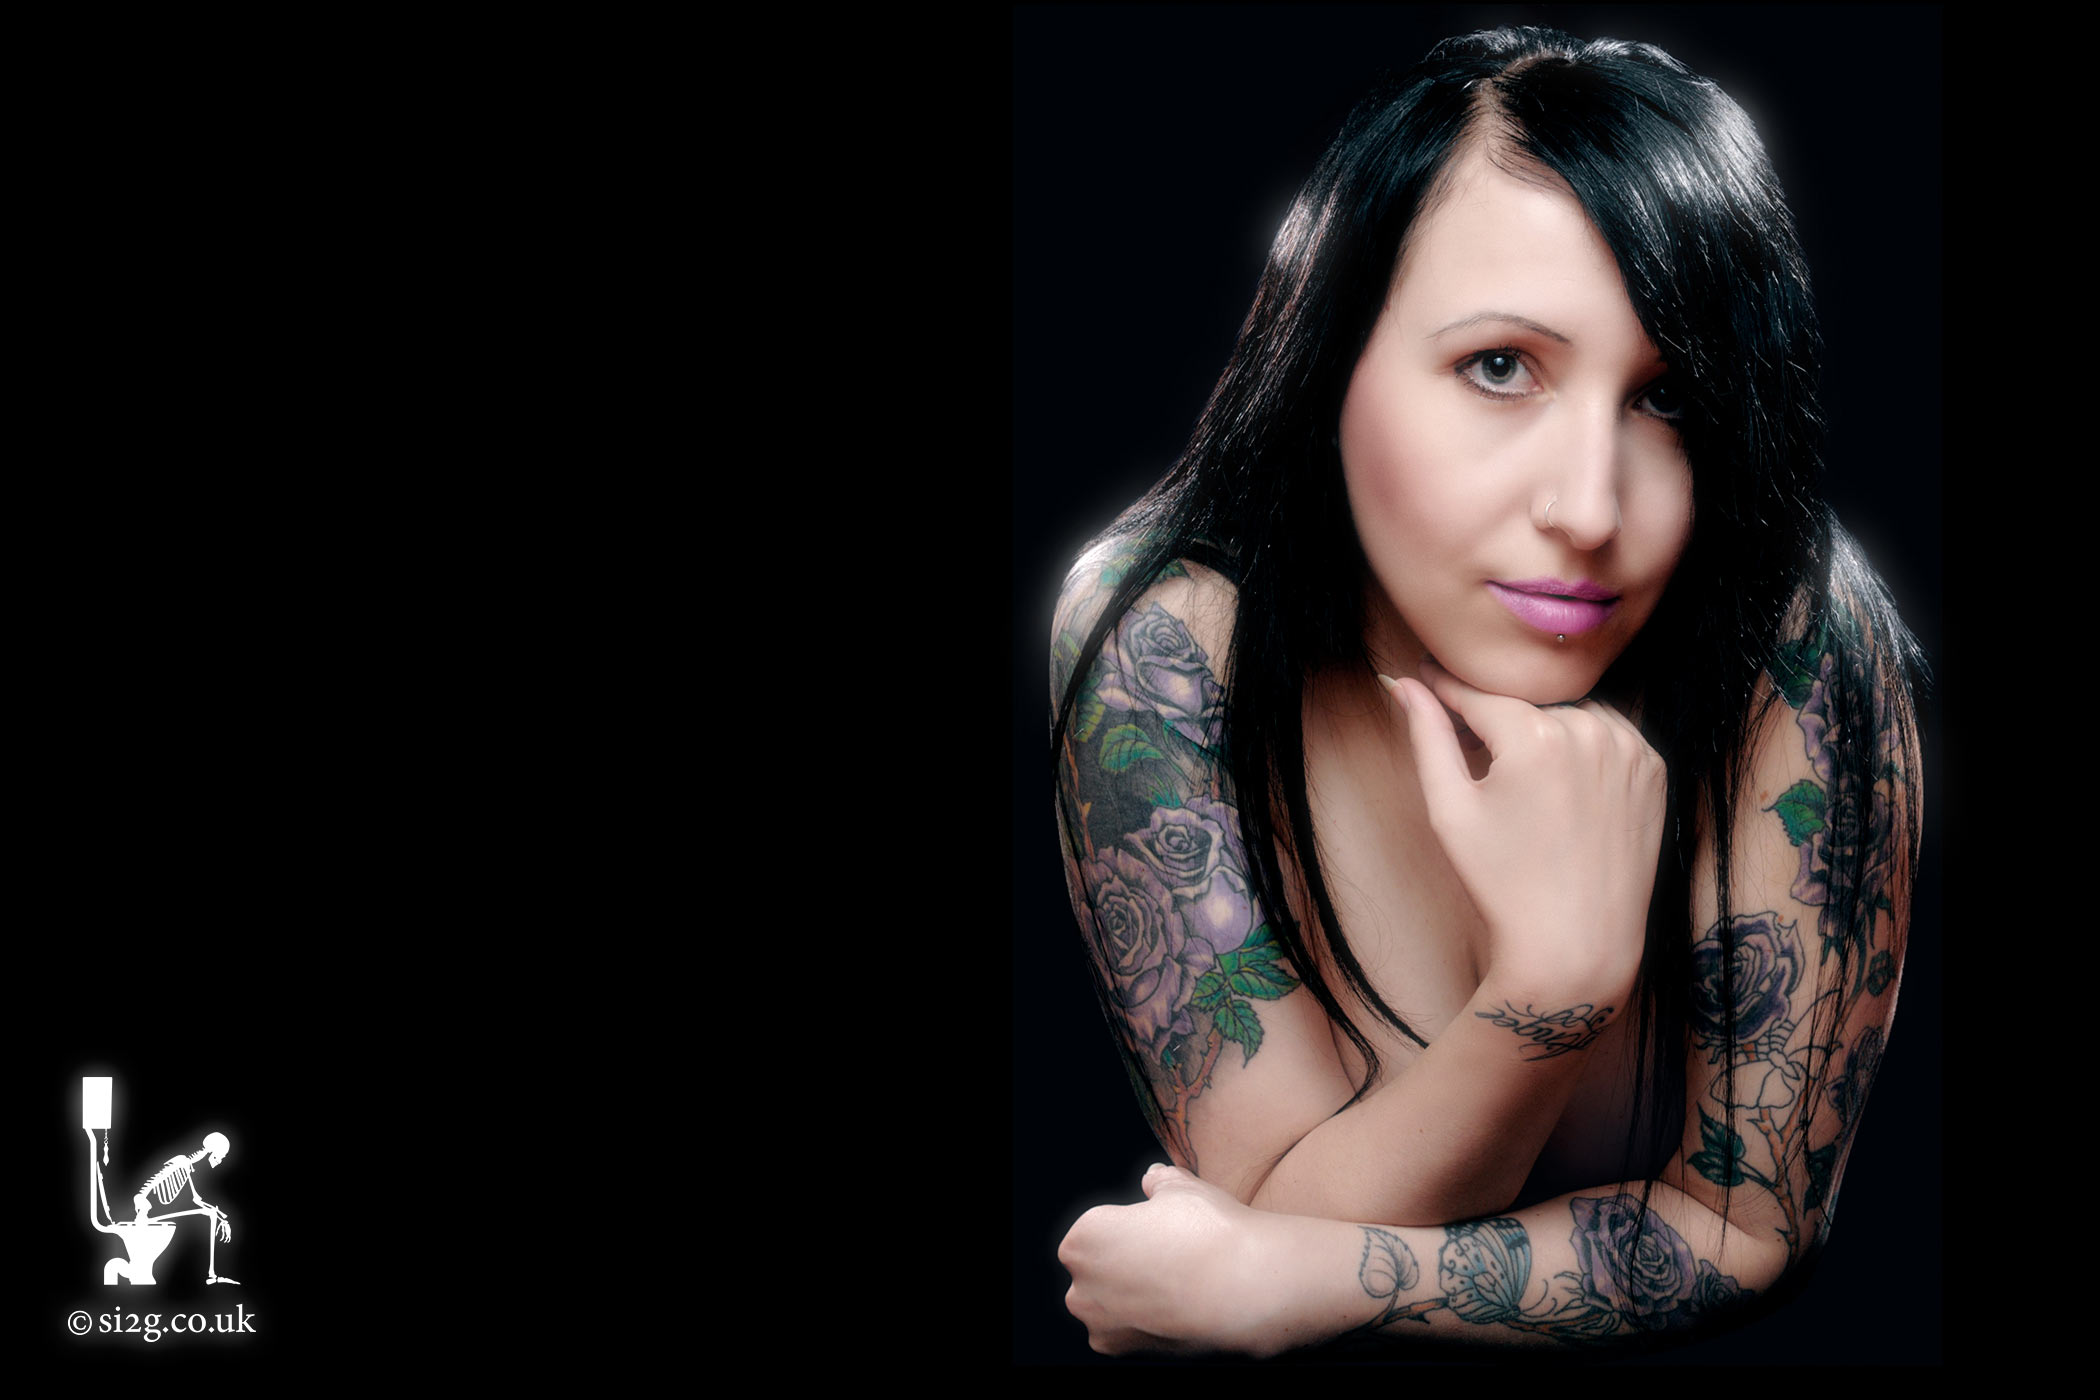 Alternative Model with Tattoos - A tasteful image of an alternative model showing off her tattoos.